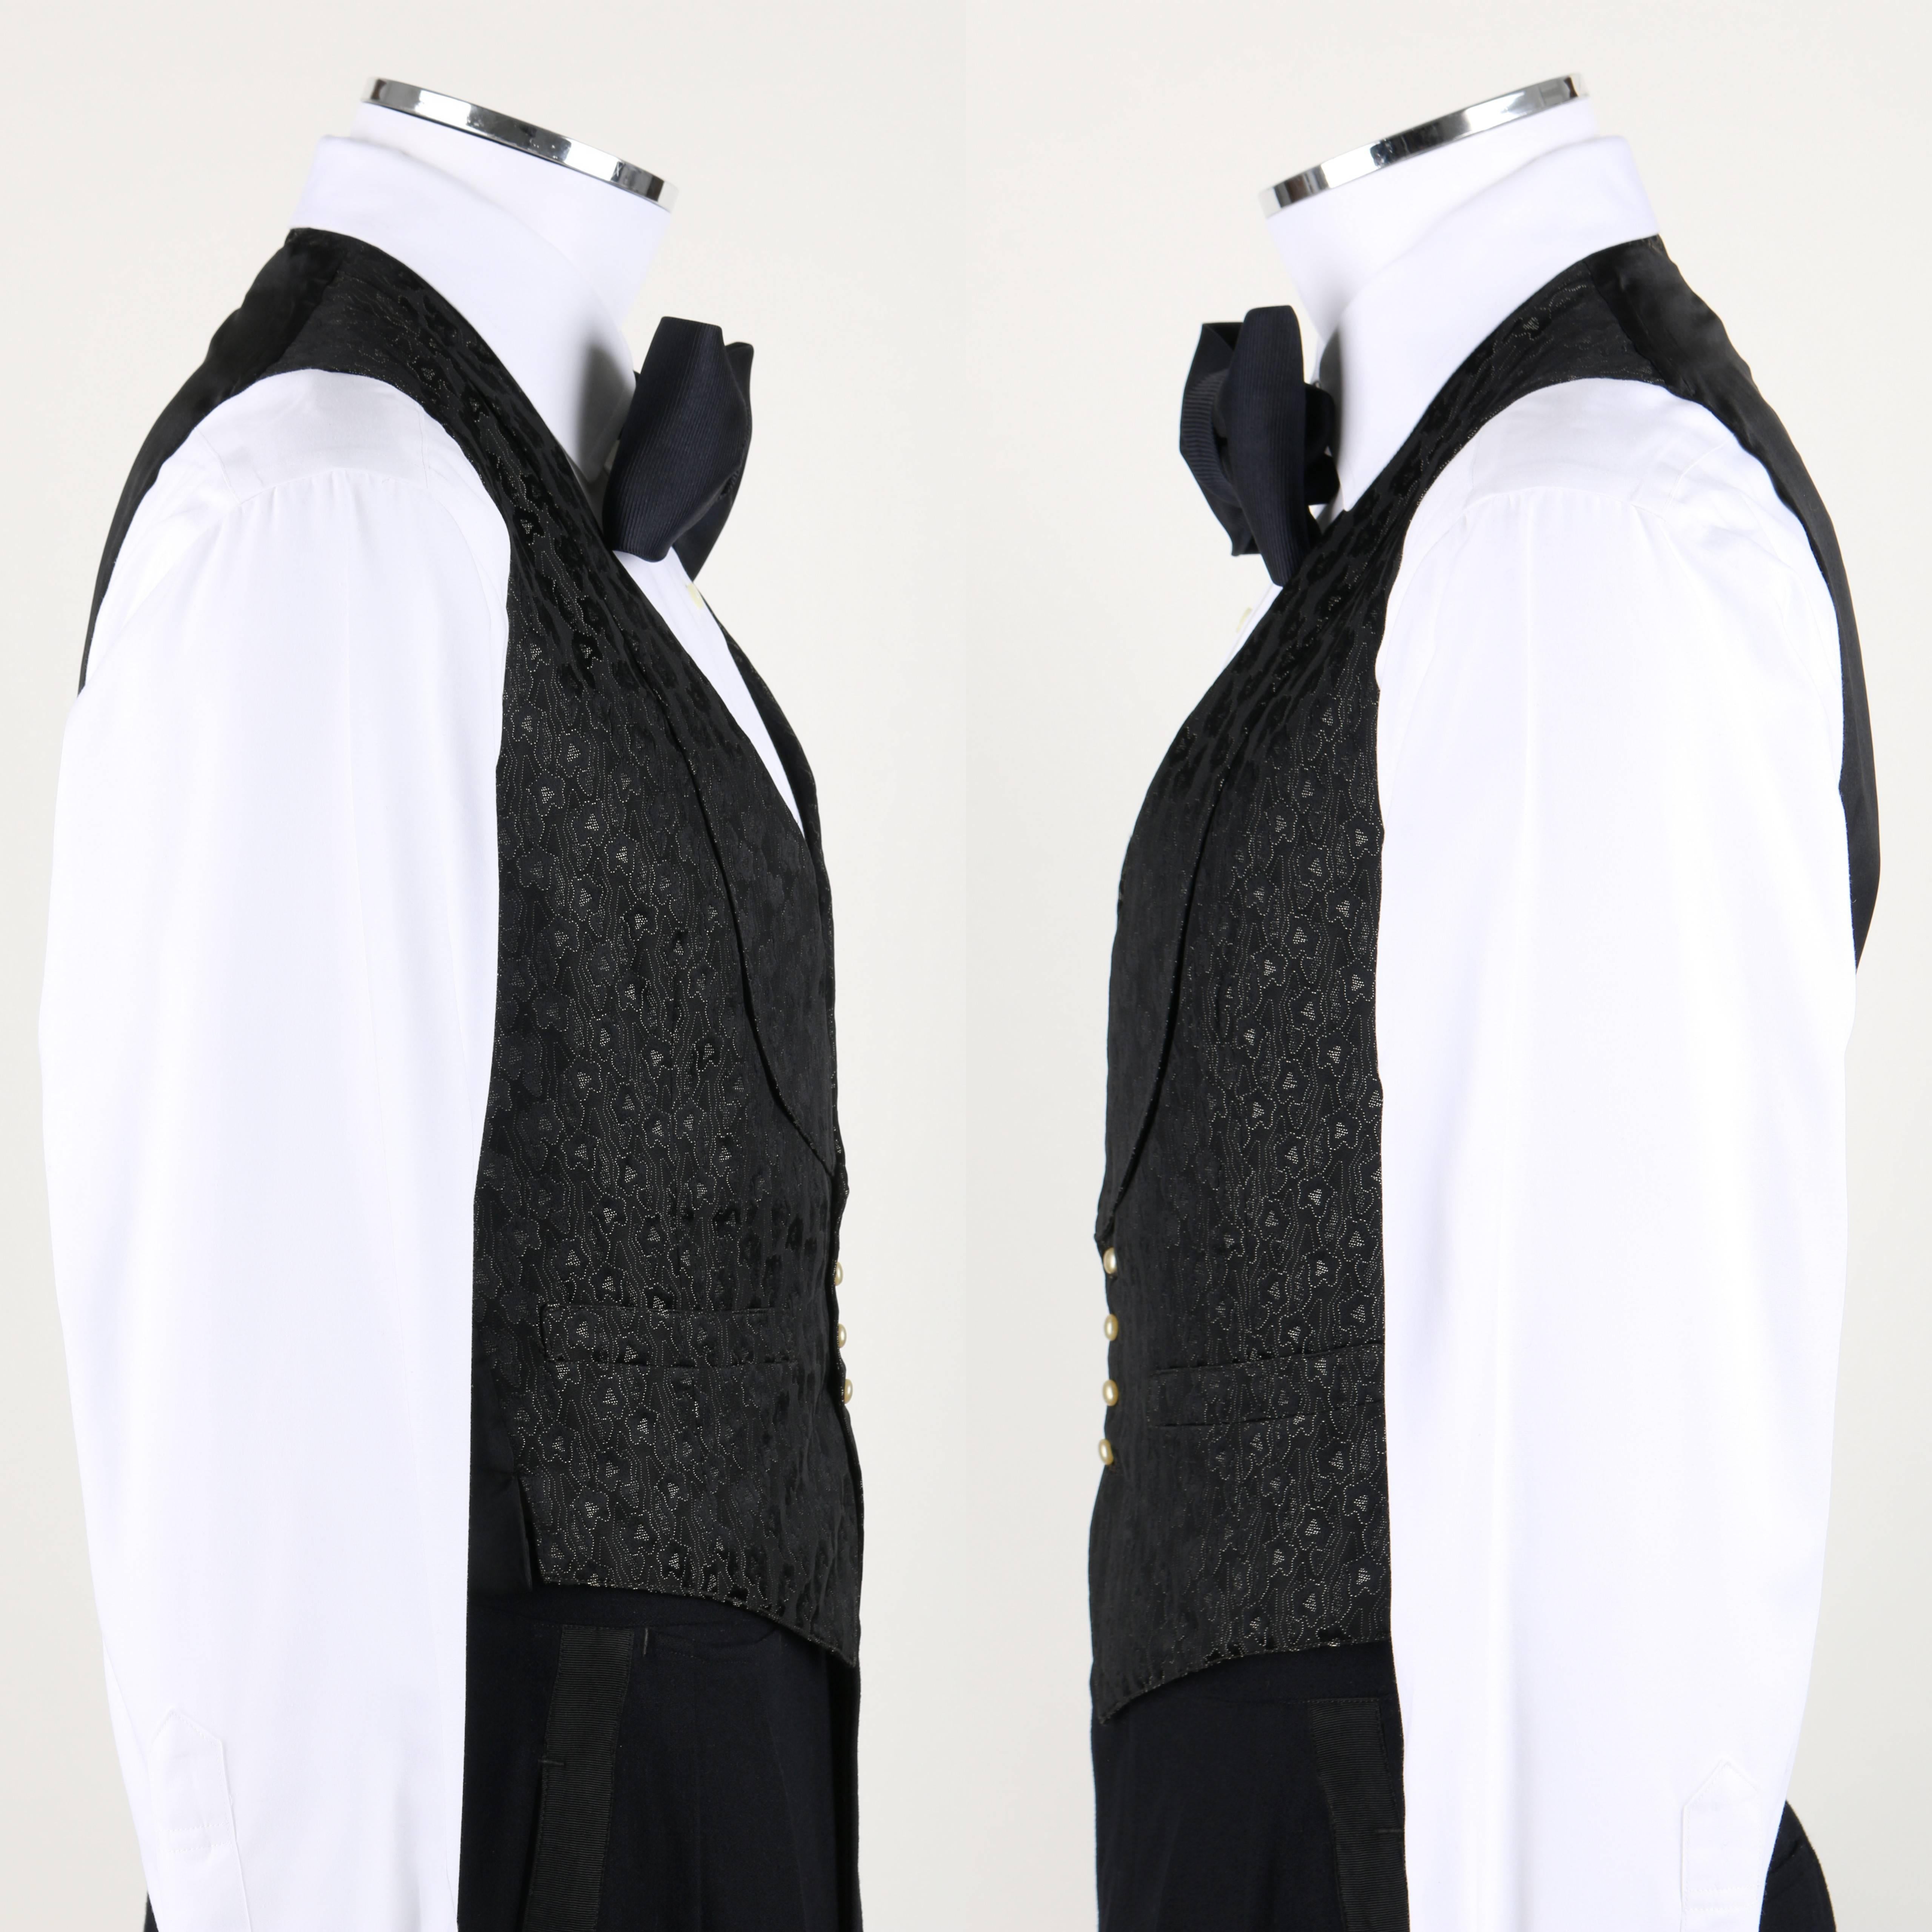 Black MORITZ & WINTER c.1932 3 Piece Formal Tailcoat Wool Silk Evening Suit Tuxedo